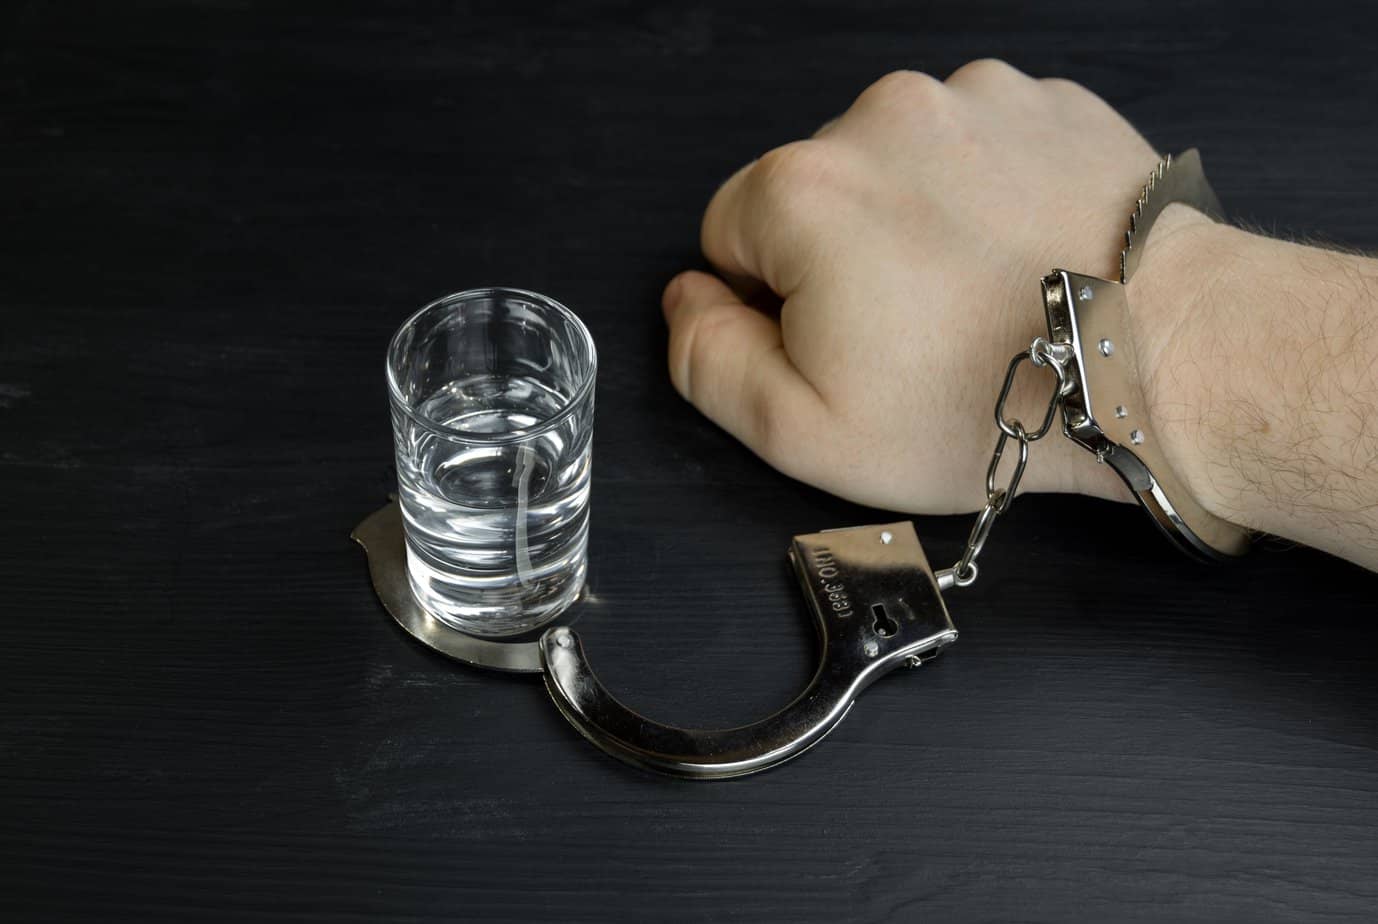 hand handcuffed to shot glass